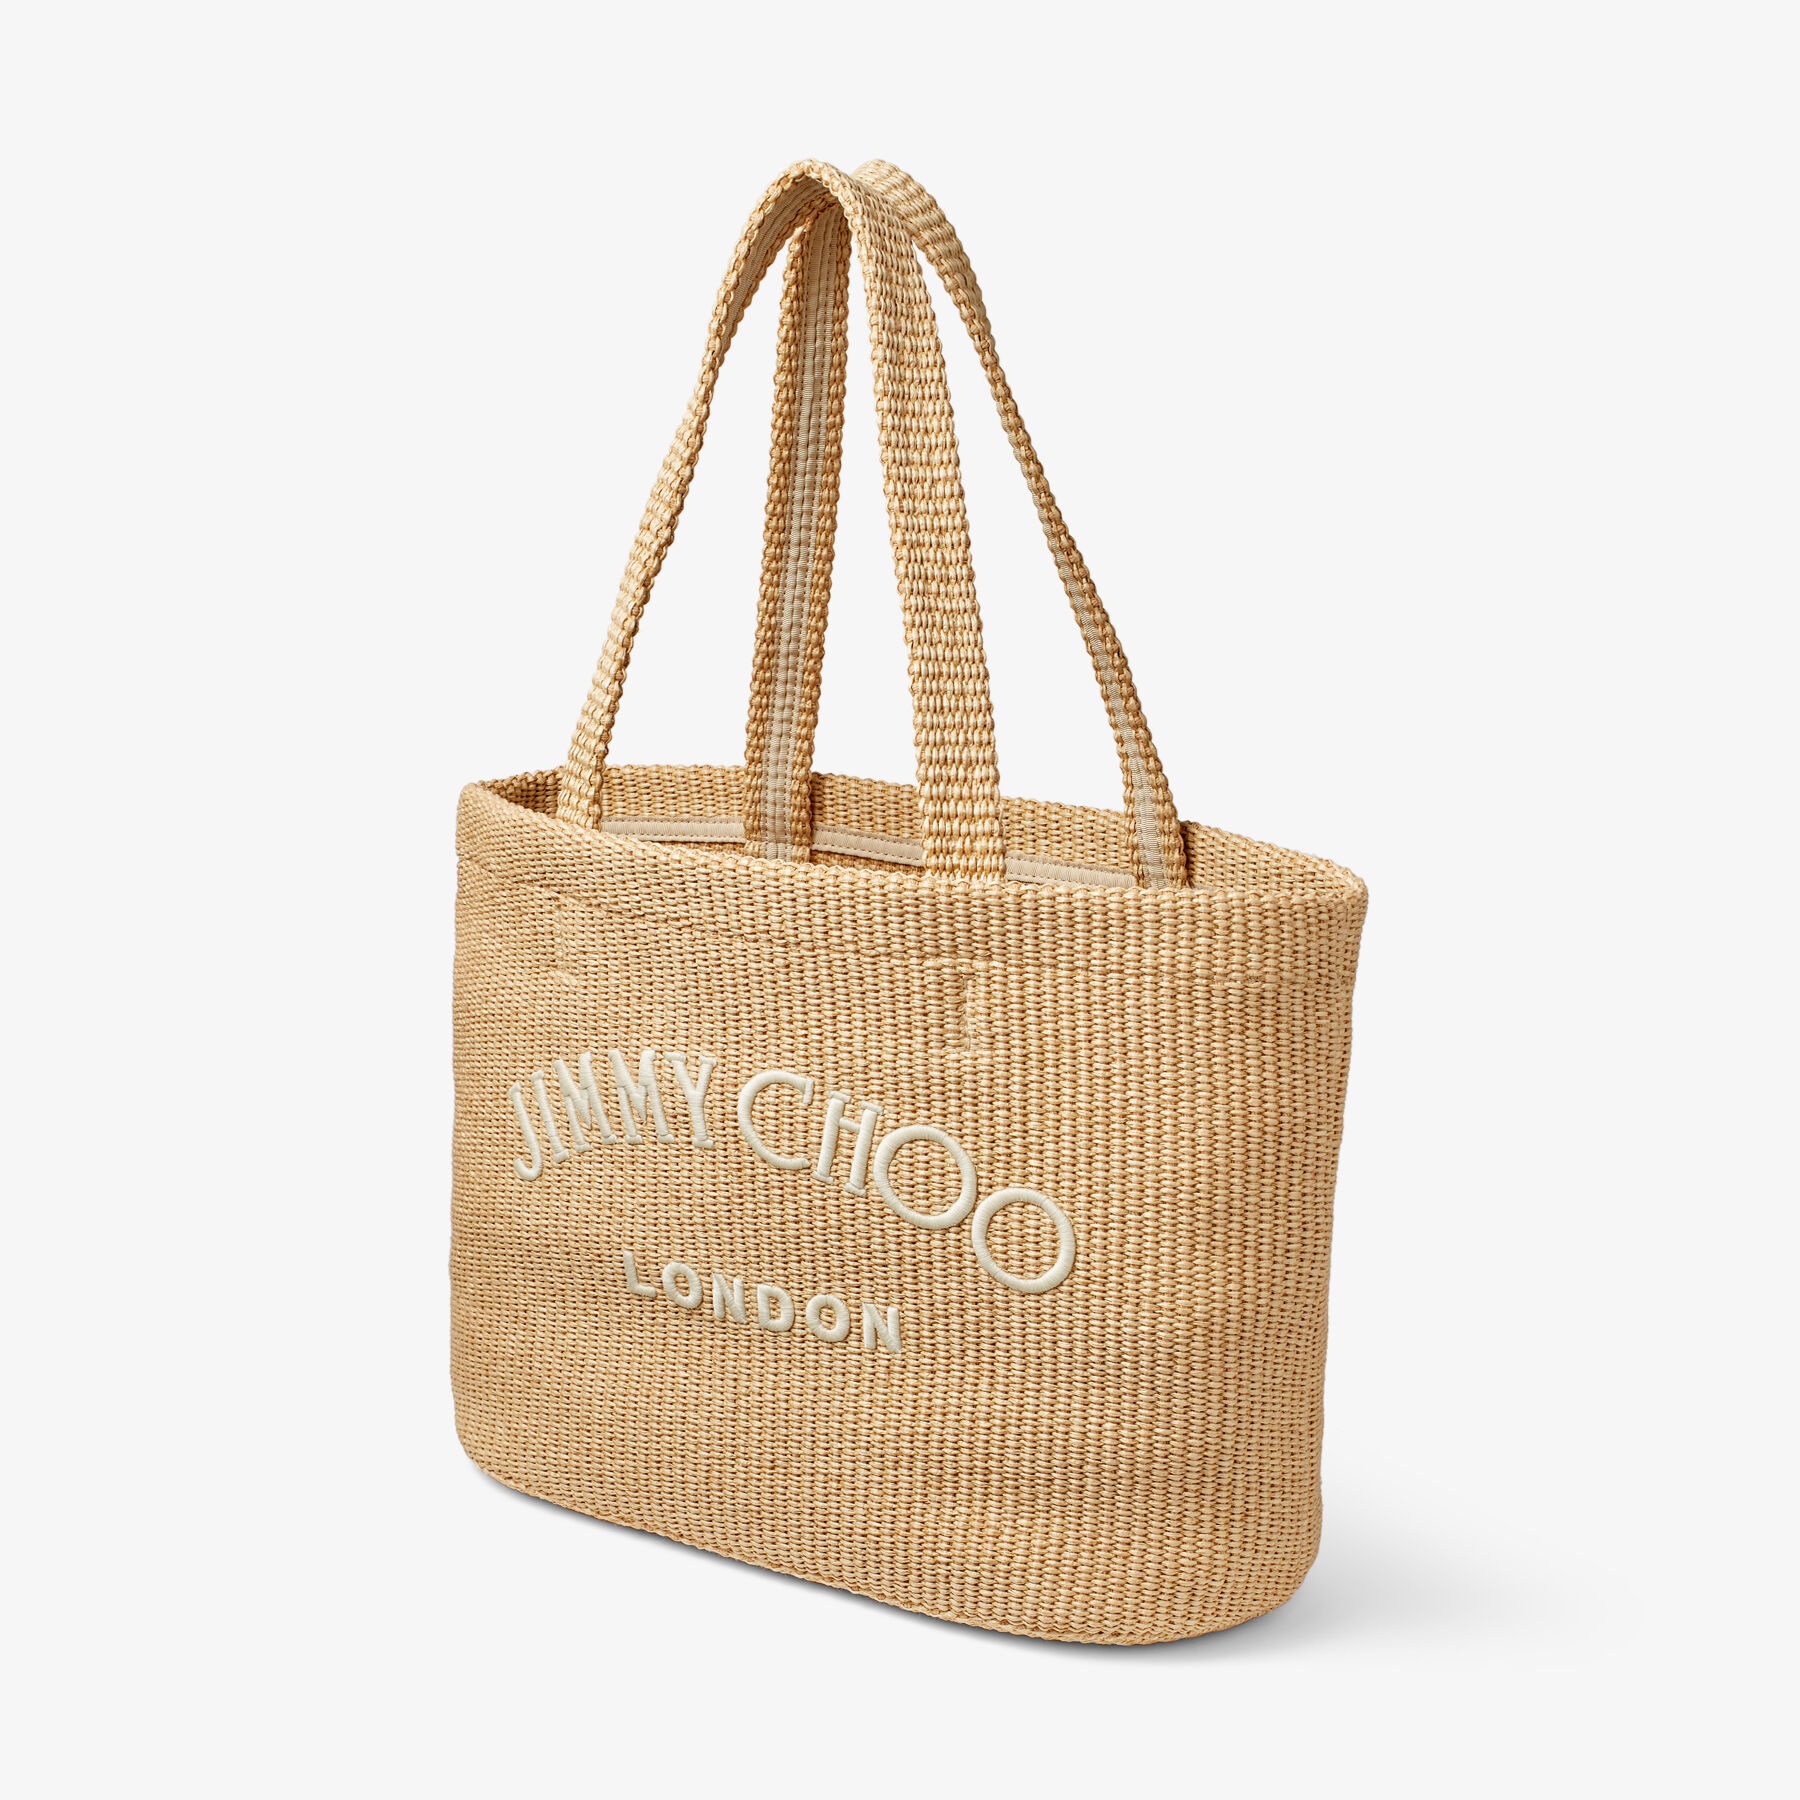 Beach Tote 
Natural Raffia Tote Bag with Jimmy Choo Embroidery - 4